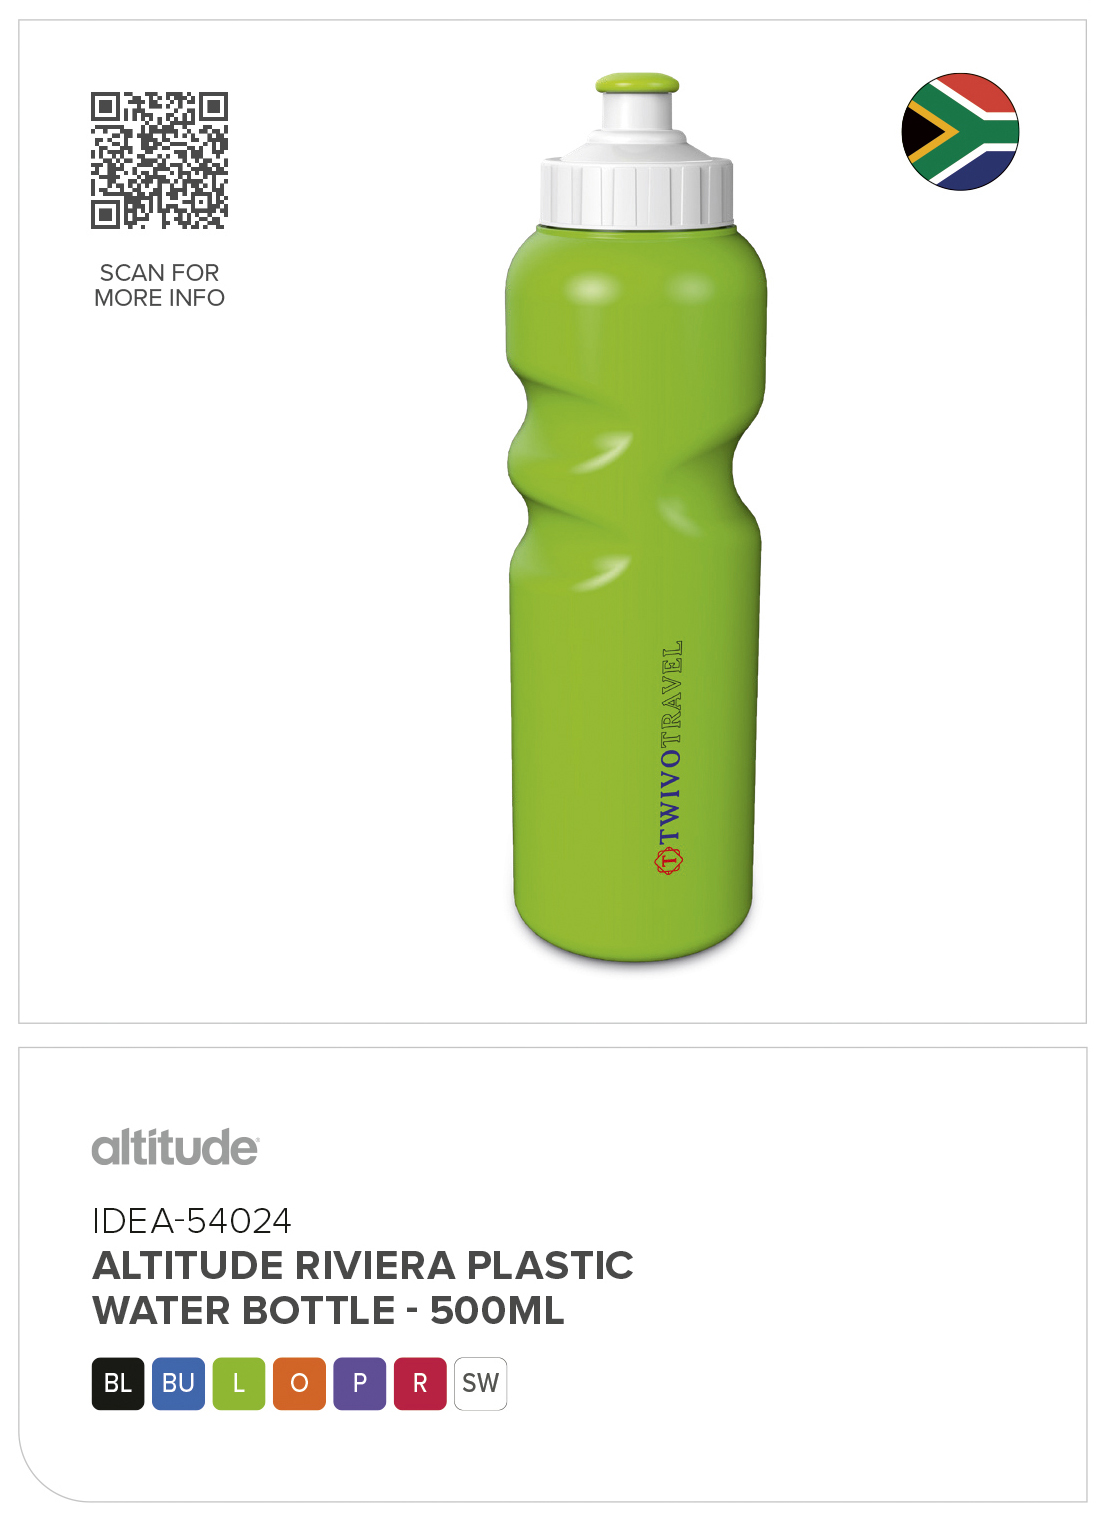 Altitude Riviera Plastic Water Bottle - 500ml CATALOGUE_IMAGE